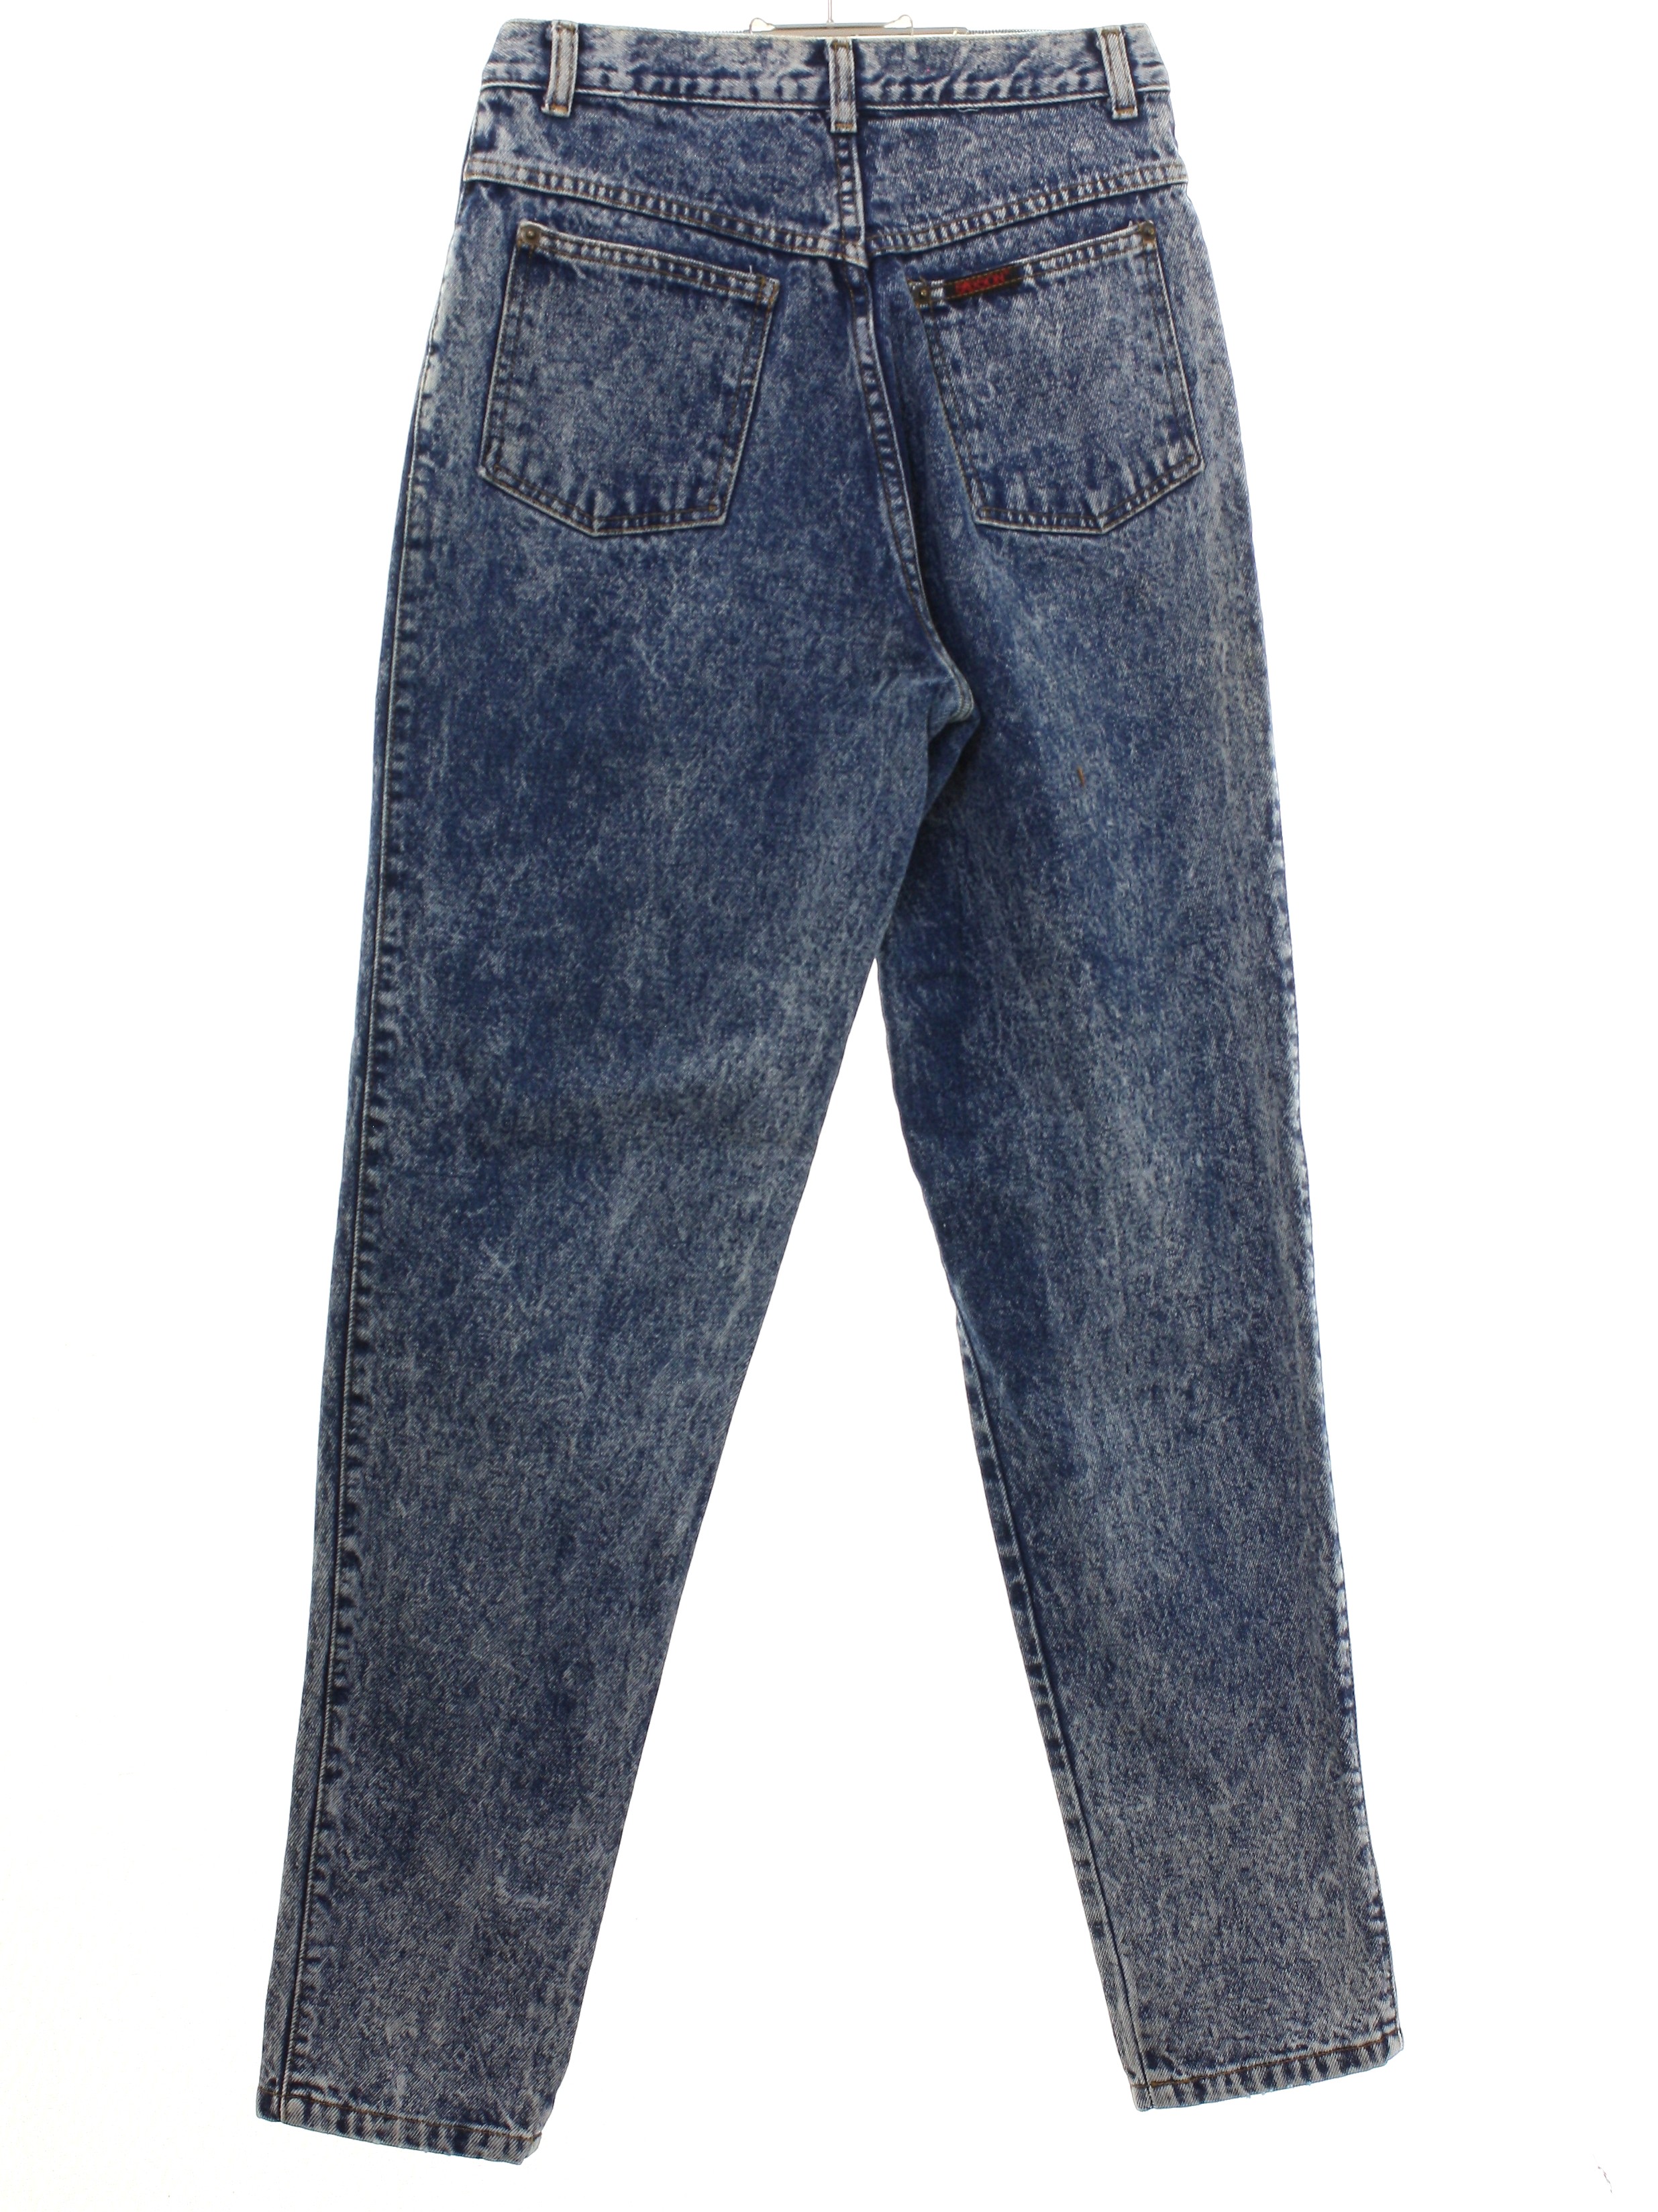 1980s high waisted jeans